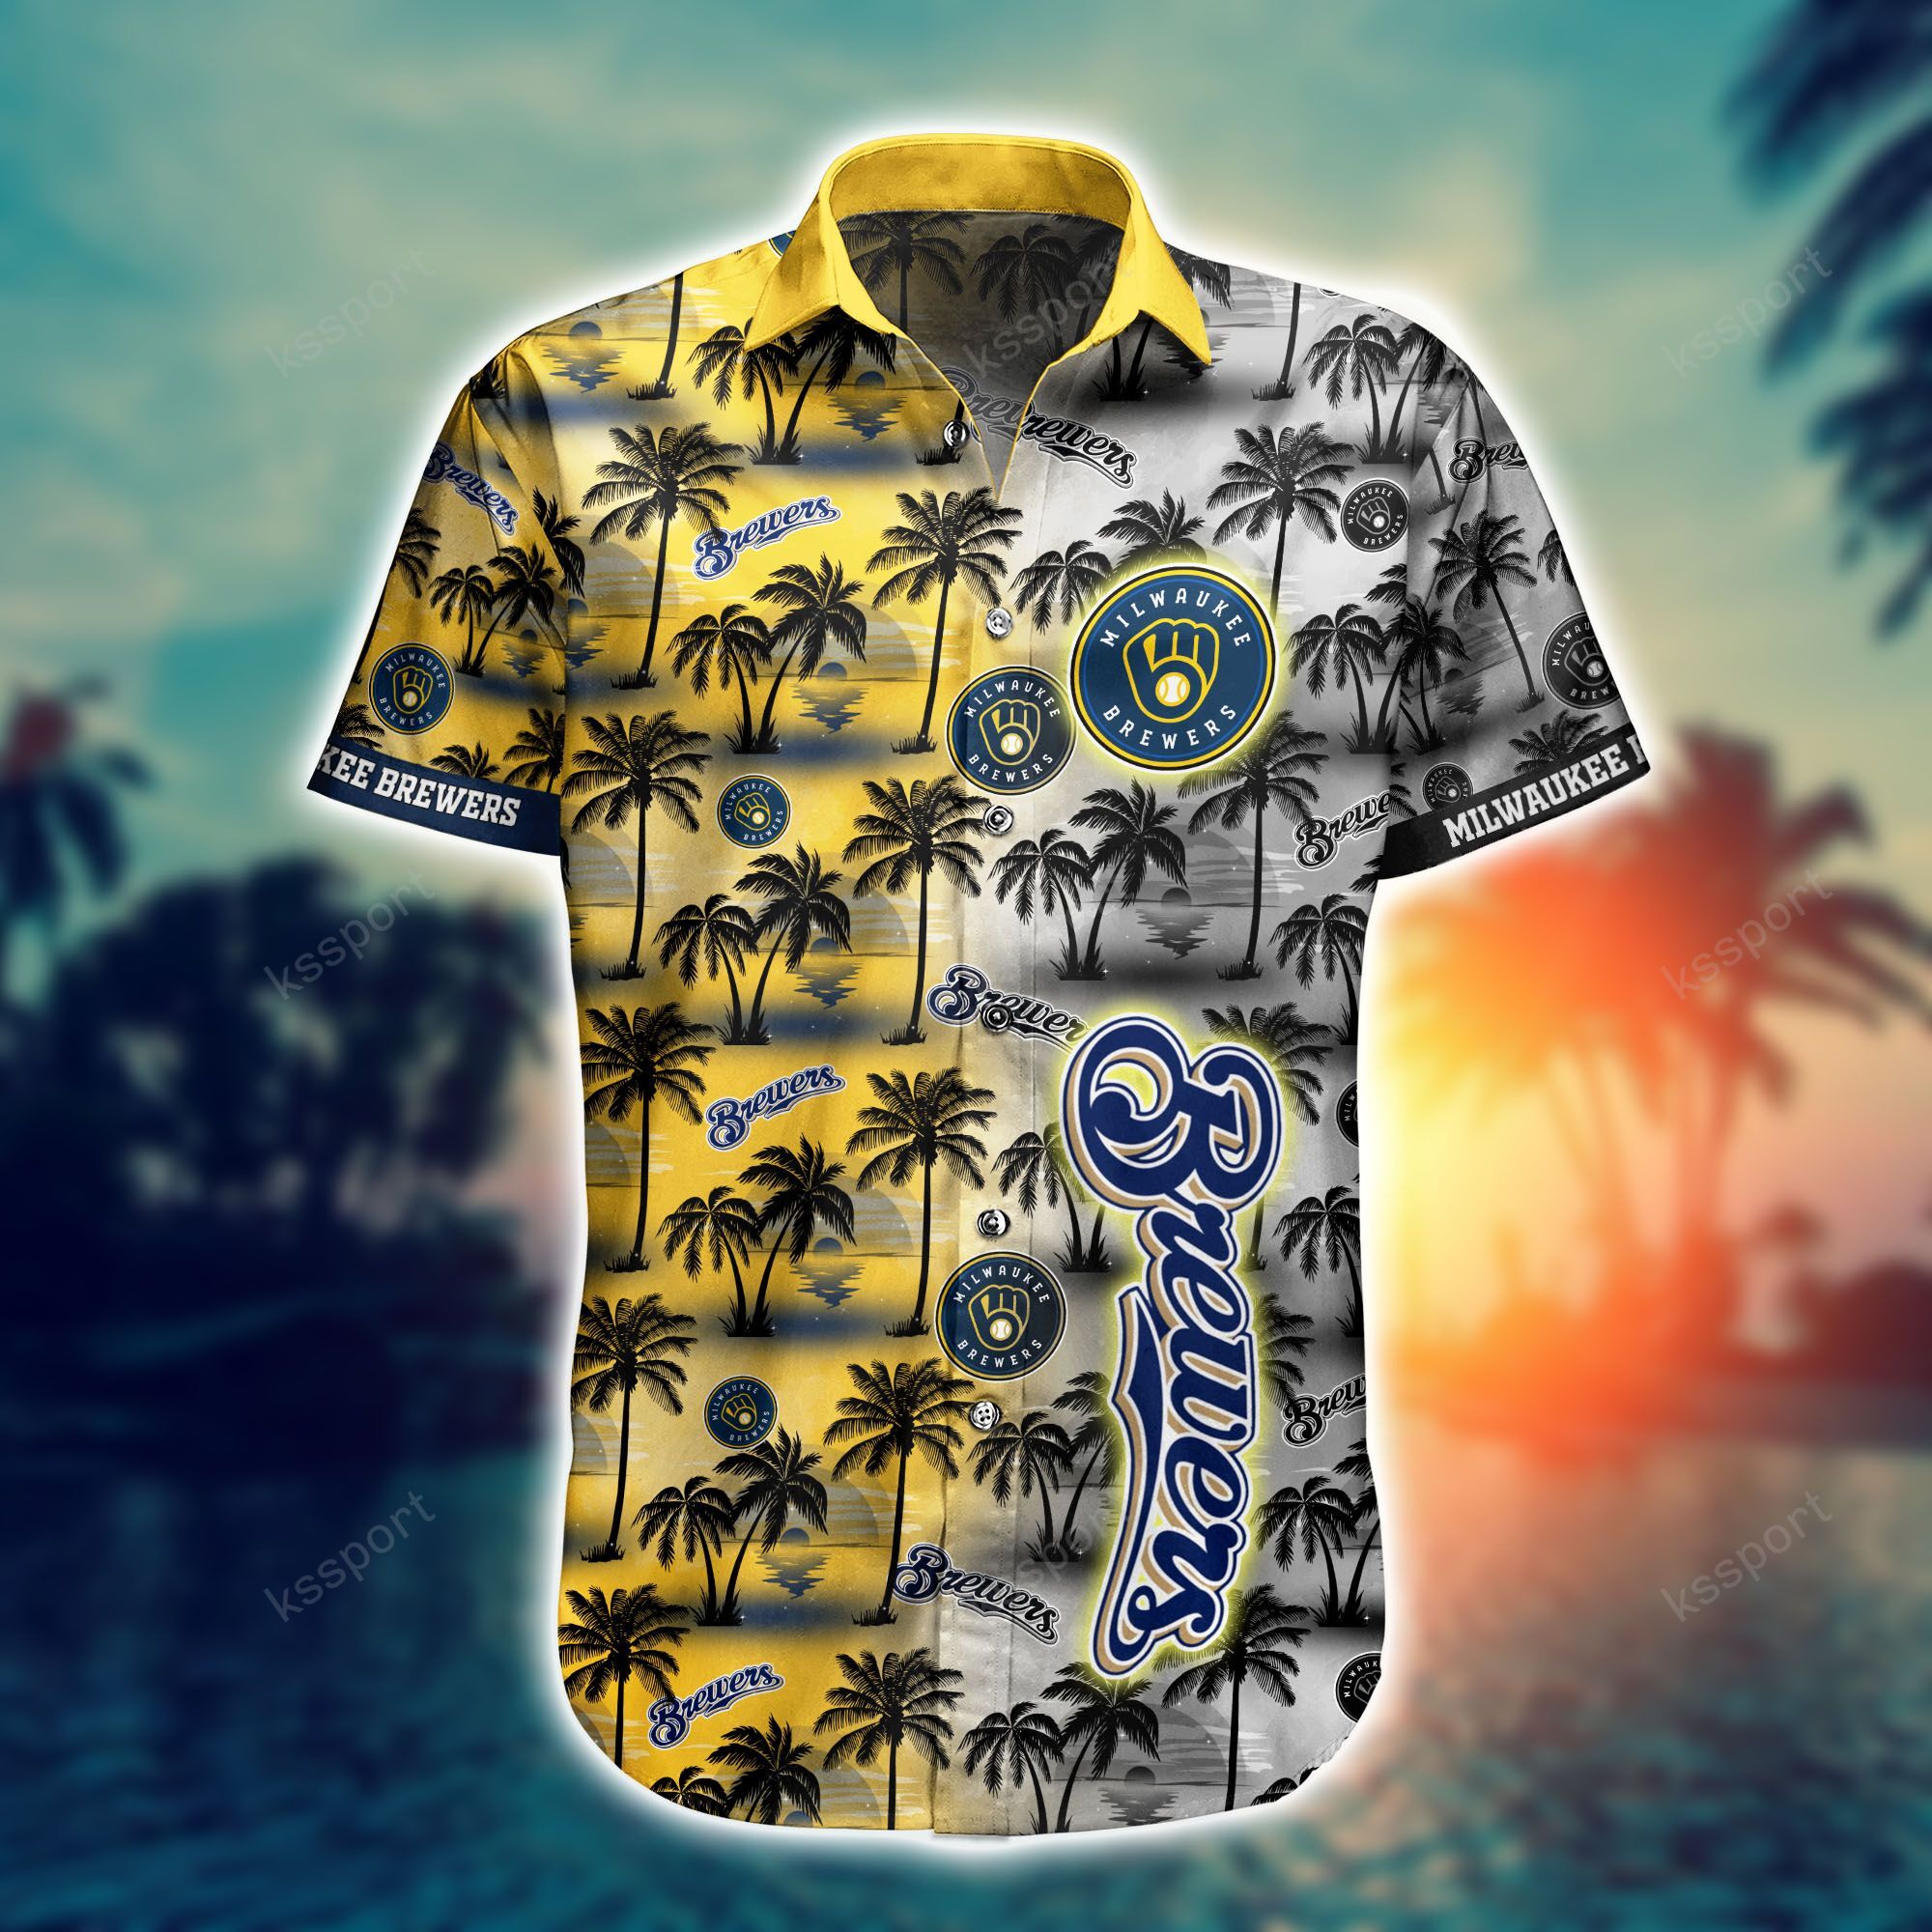 Hawaiian shirt and shorts is a great way to look stylish at a beach party 42